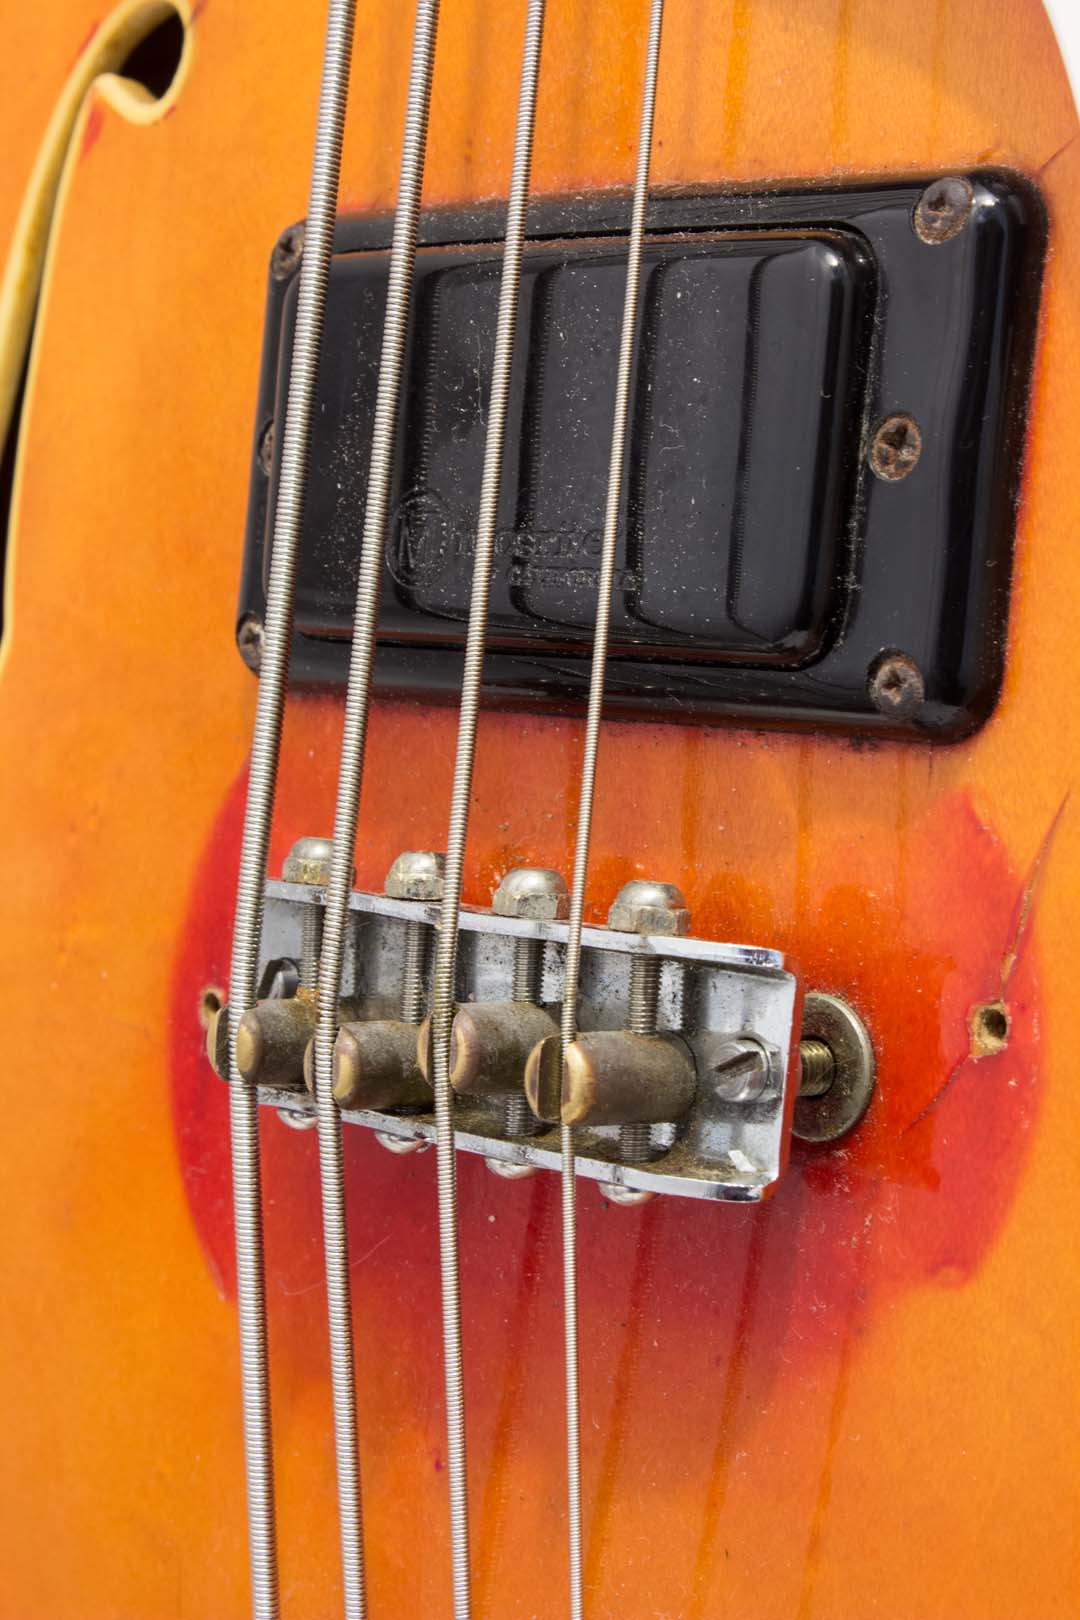 Mosrite Celebrity III Bass Red 1968